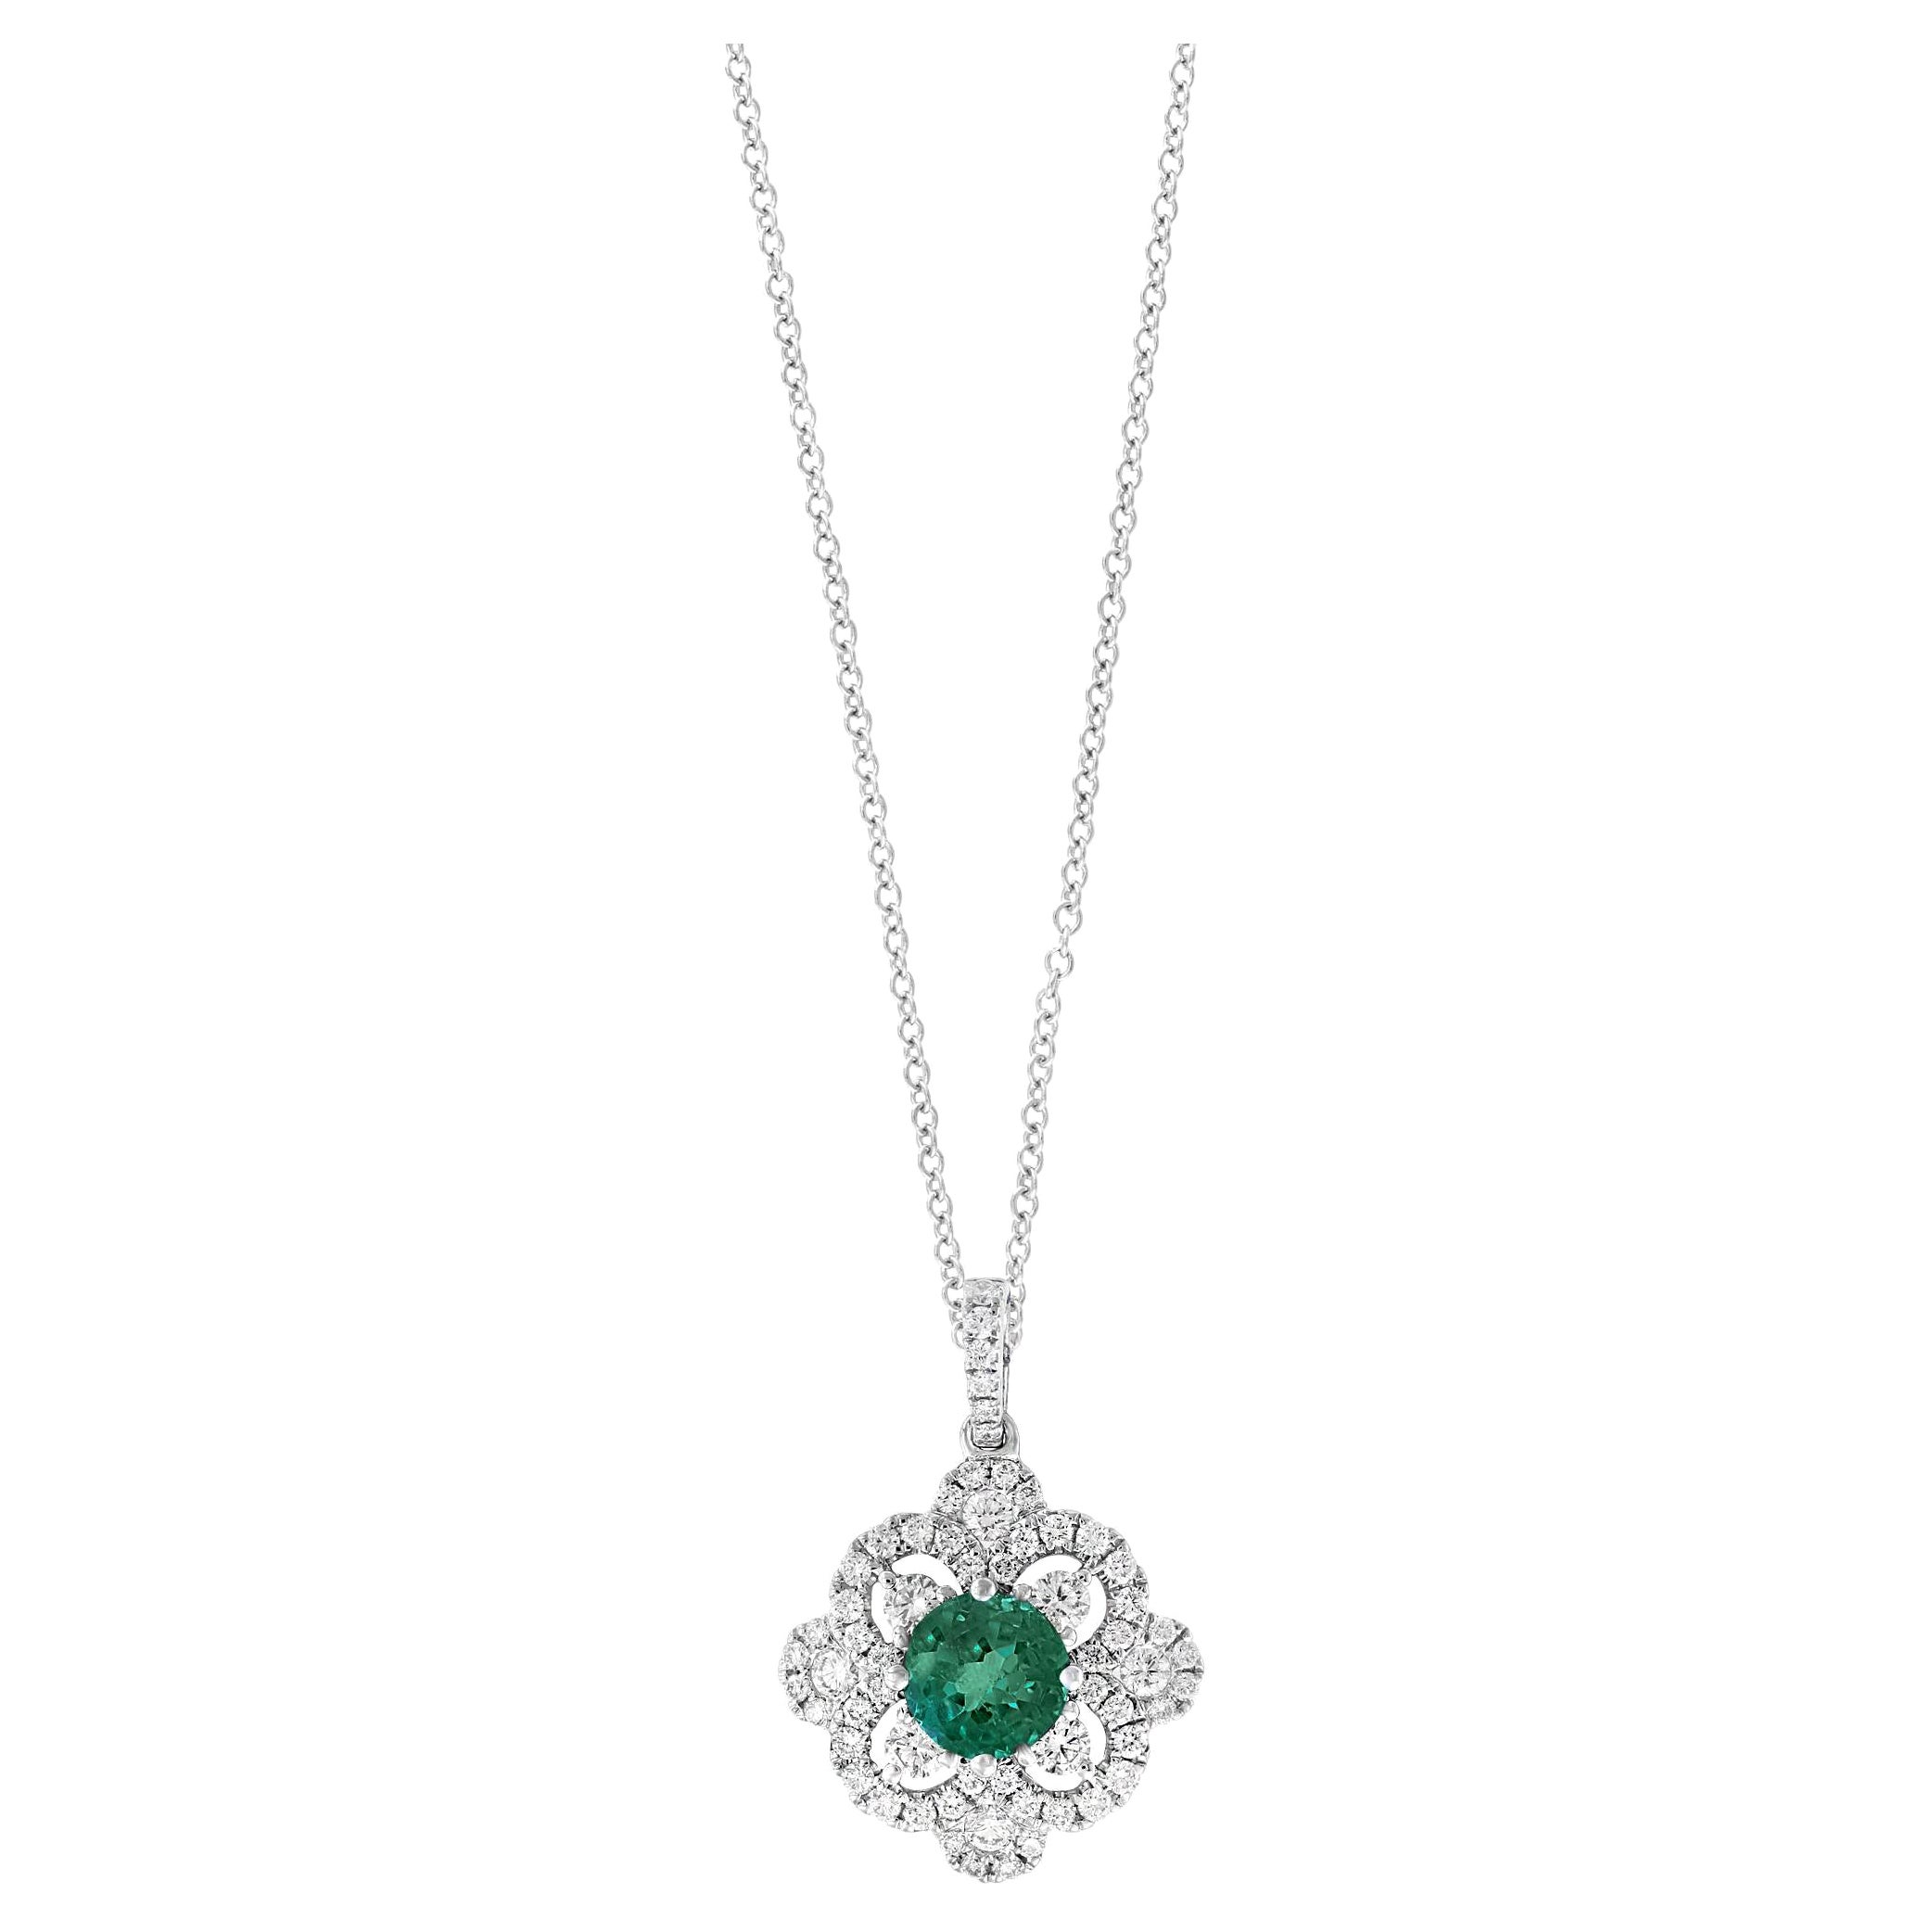 0.81 Carat Round Cut Emerald and Diamond Pendant Necklace in 18K